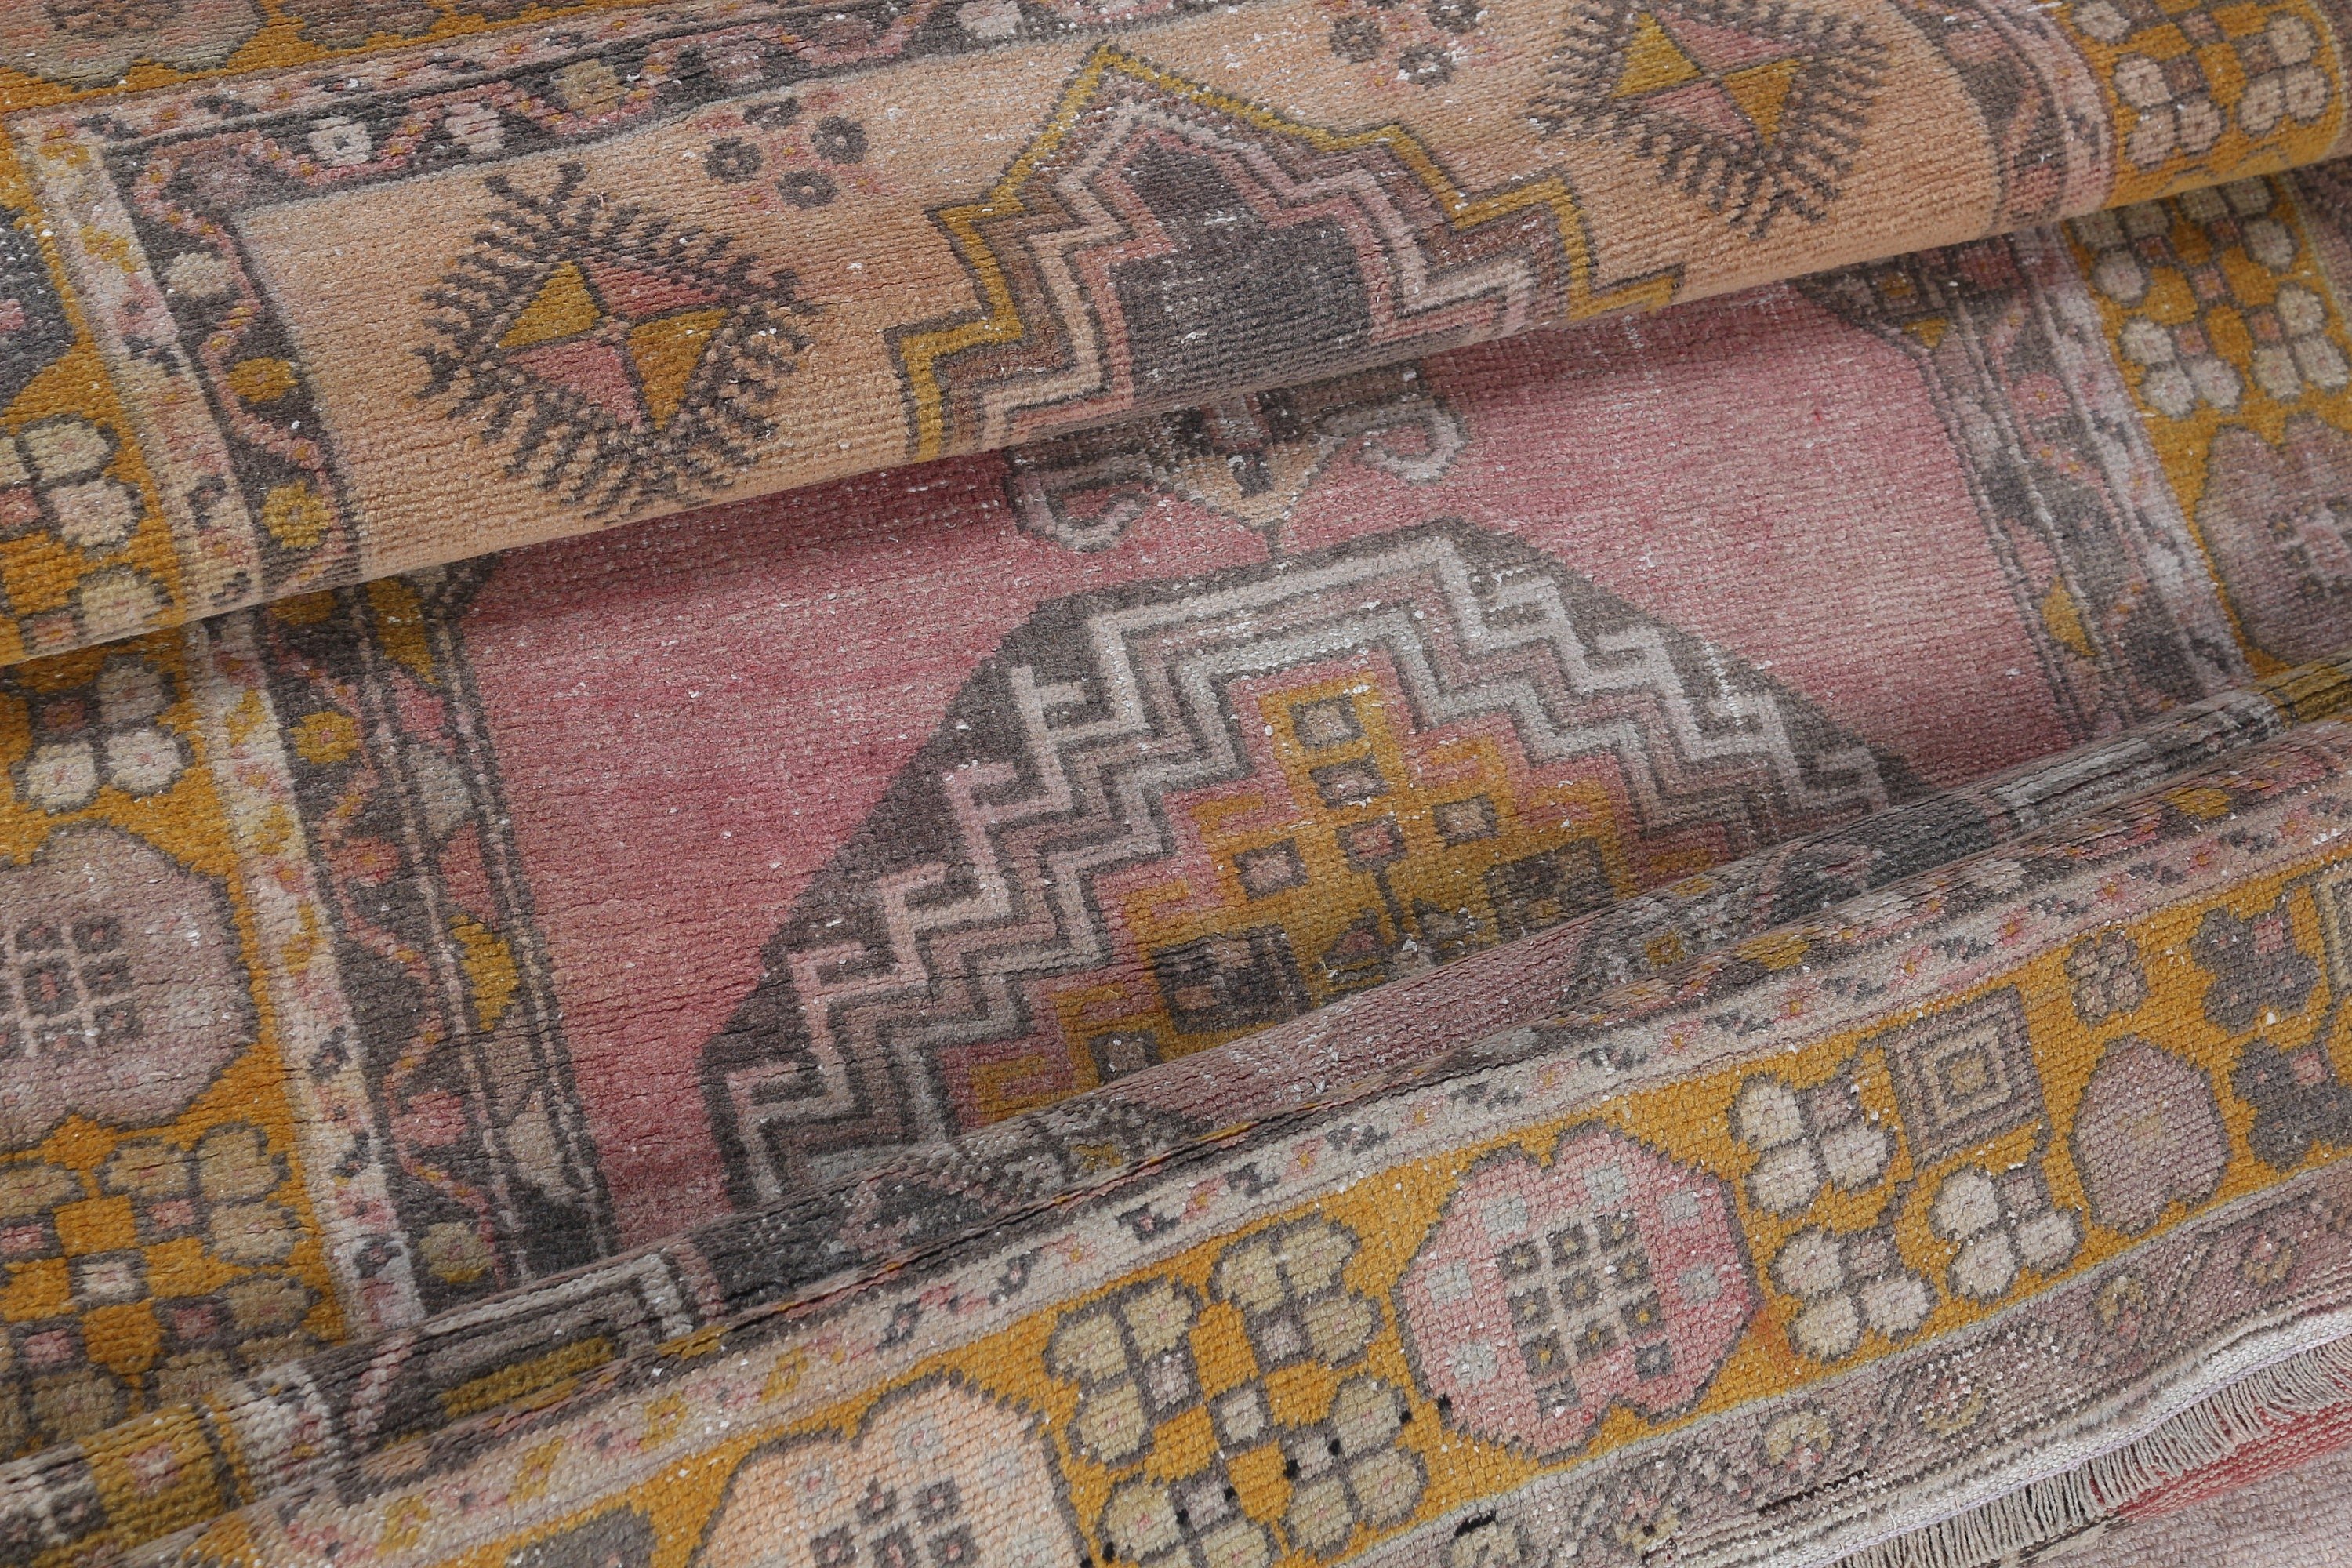 Anatolian Rugs, Vintage Rug, Turkish Rug, Kitchen Rug, 3.8x7 ft Area Rug, Pink Kitchen Rug, Floor Rug, Rugs for Bedroom, Dining Room Rugs